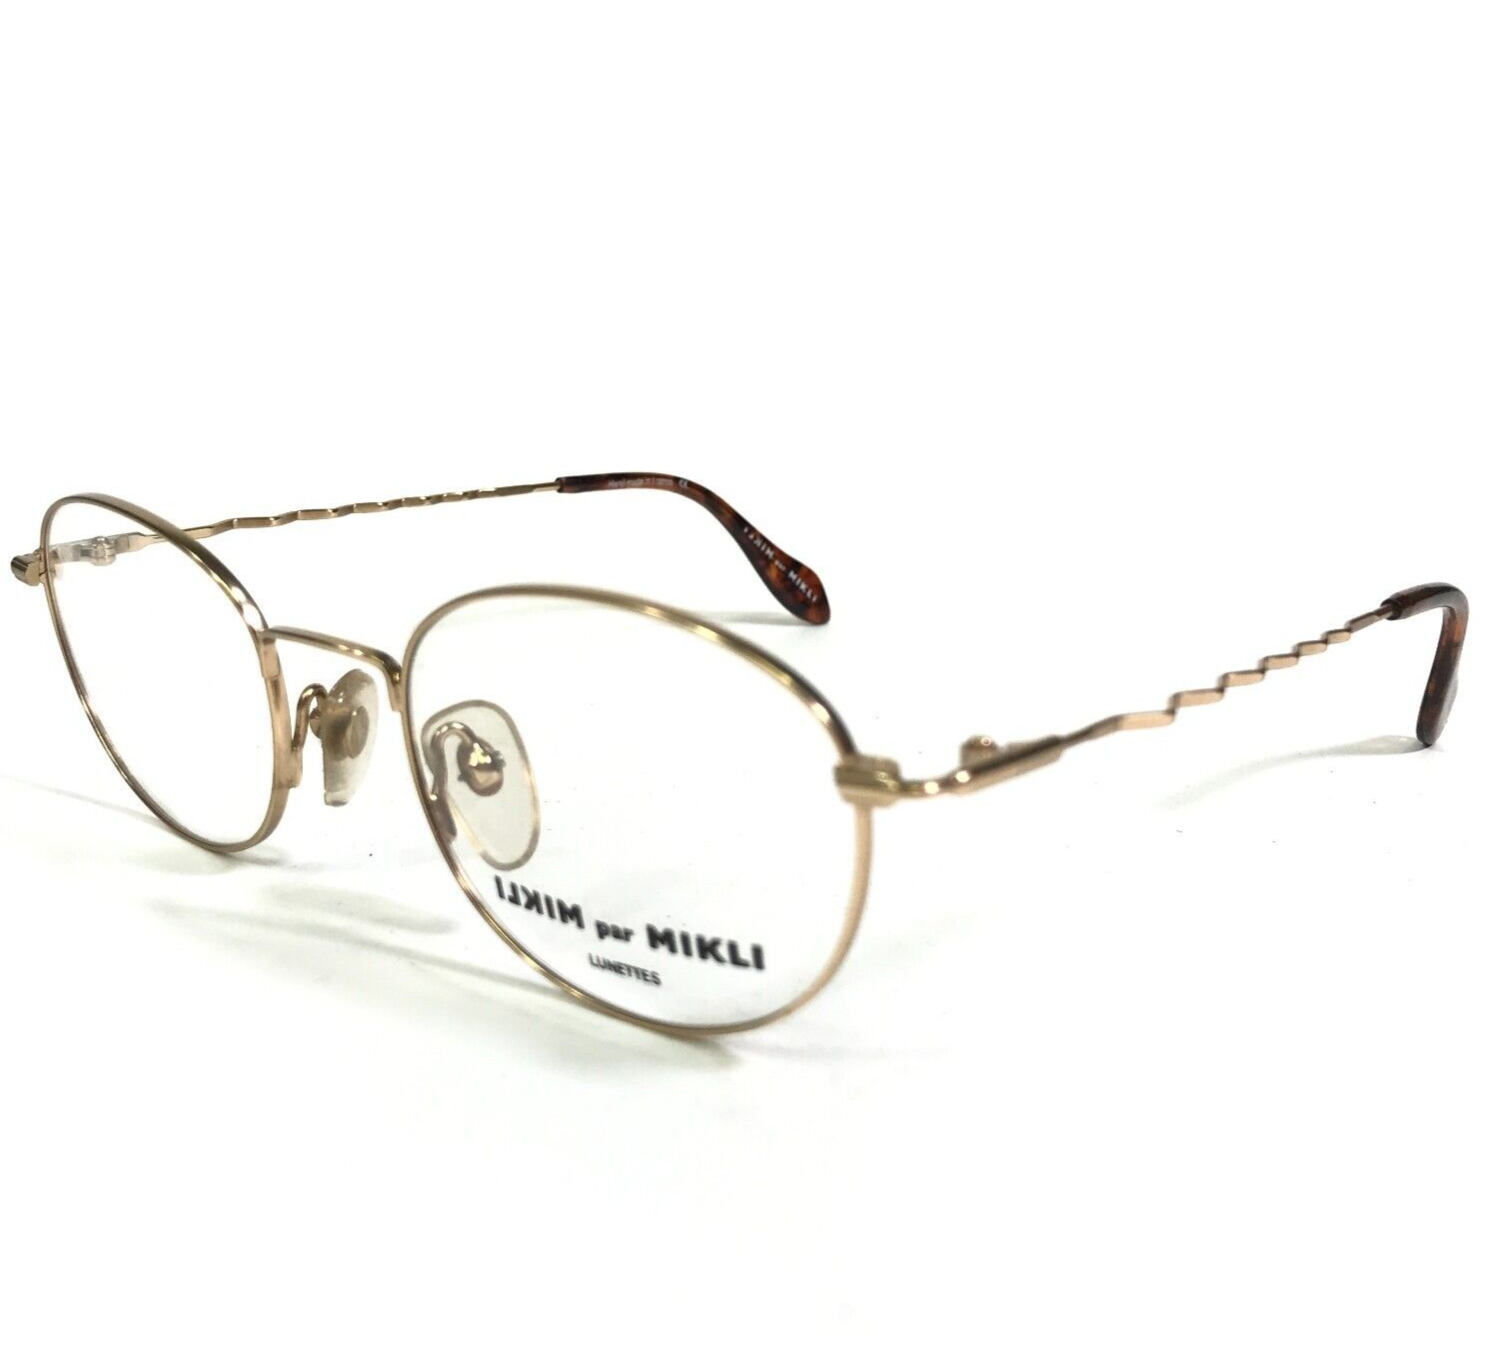 Primary image for Mikli Eyeglasses Frames 6704 COL 0400 Gold Round Full Wire Rim 48-20-130